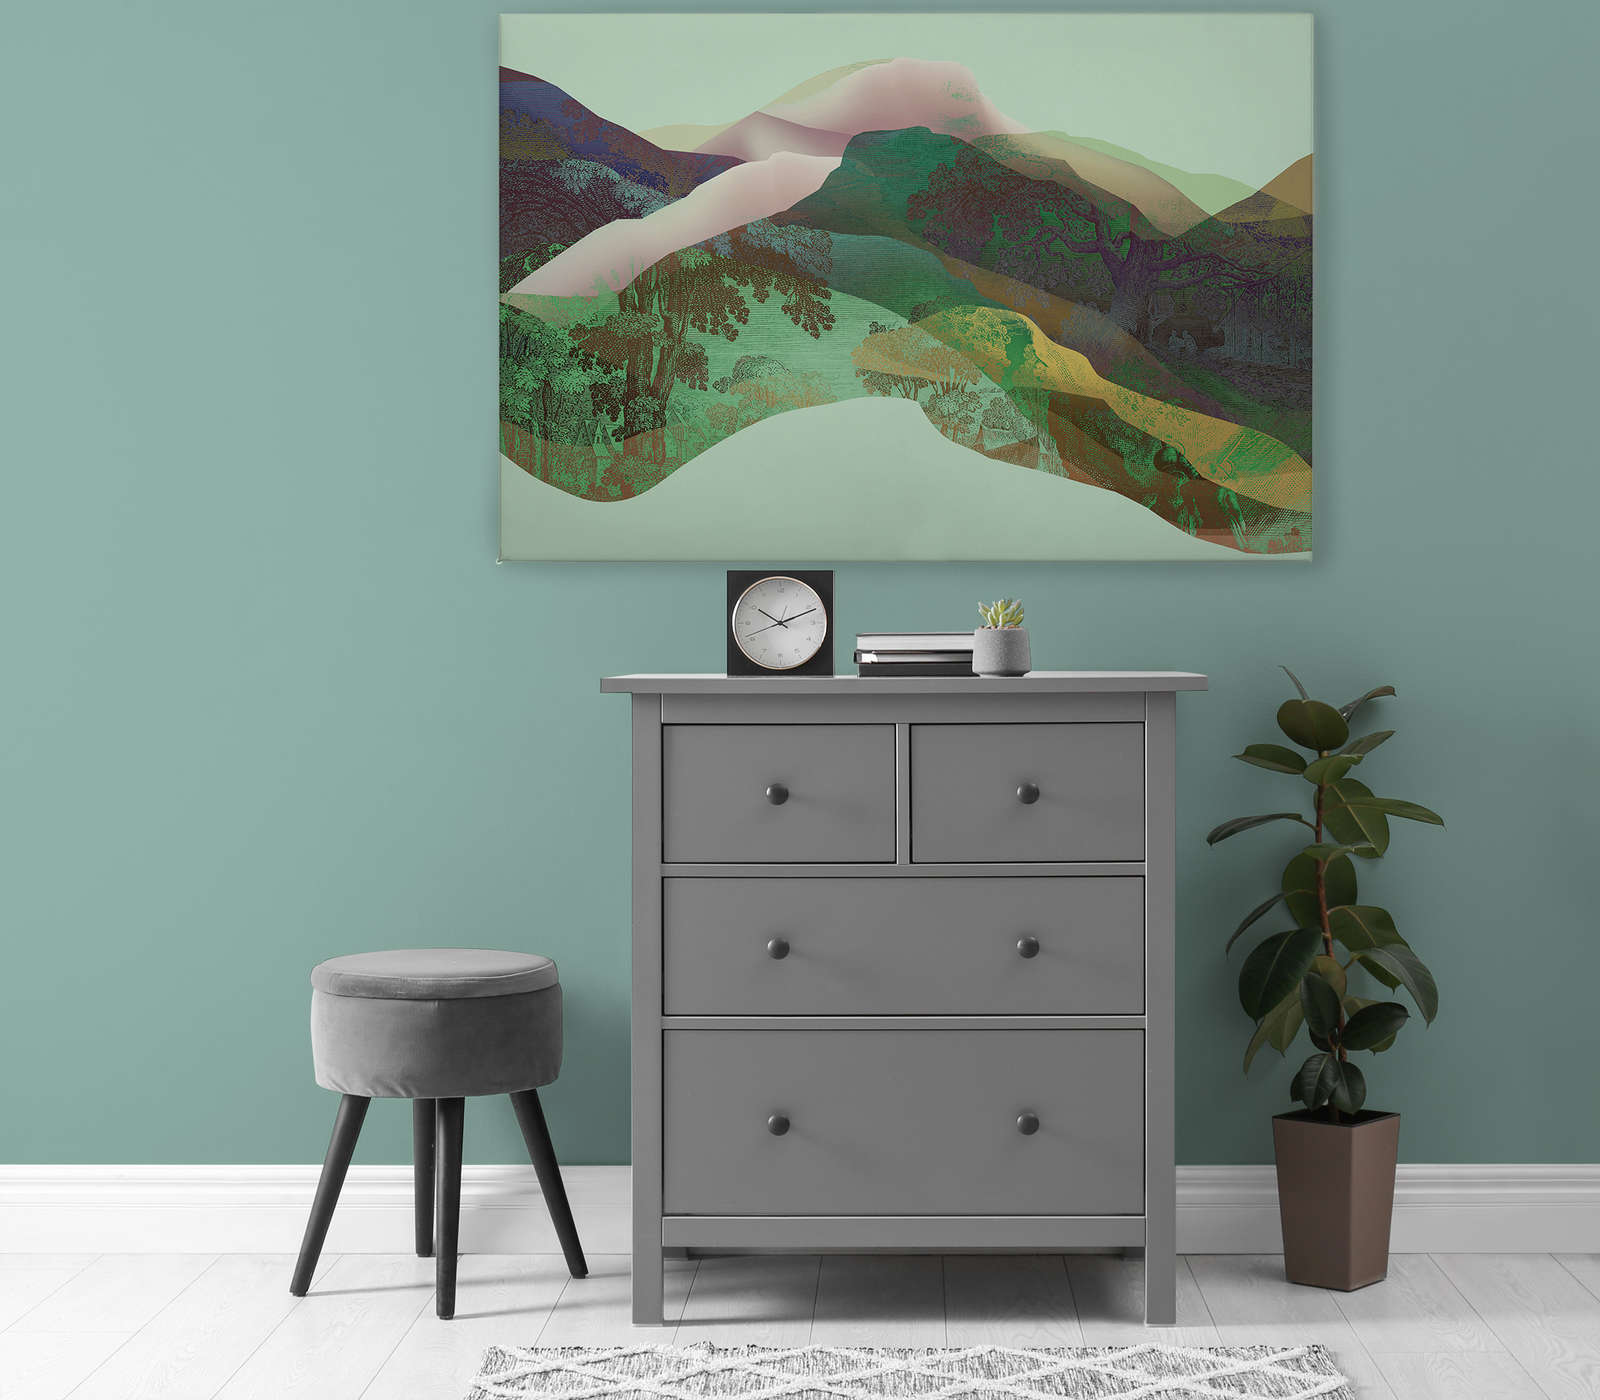             Magic Mountain 3 - Leinwandbild grüne Berge modernes Design – 1,20 m x 0,80 m
        